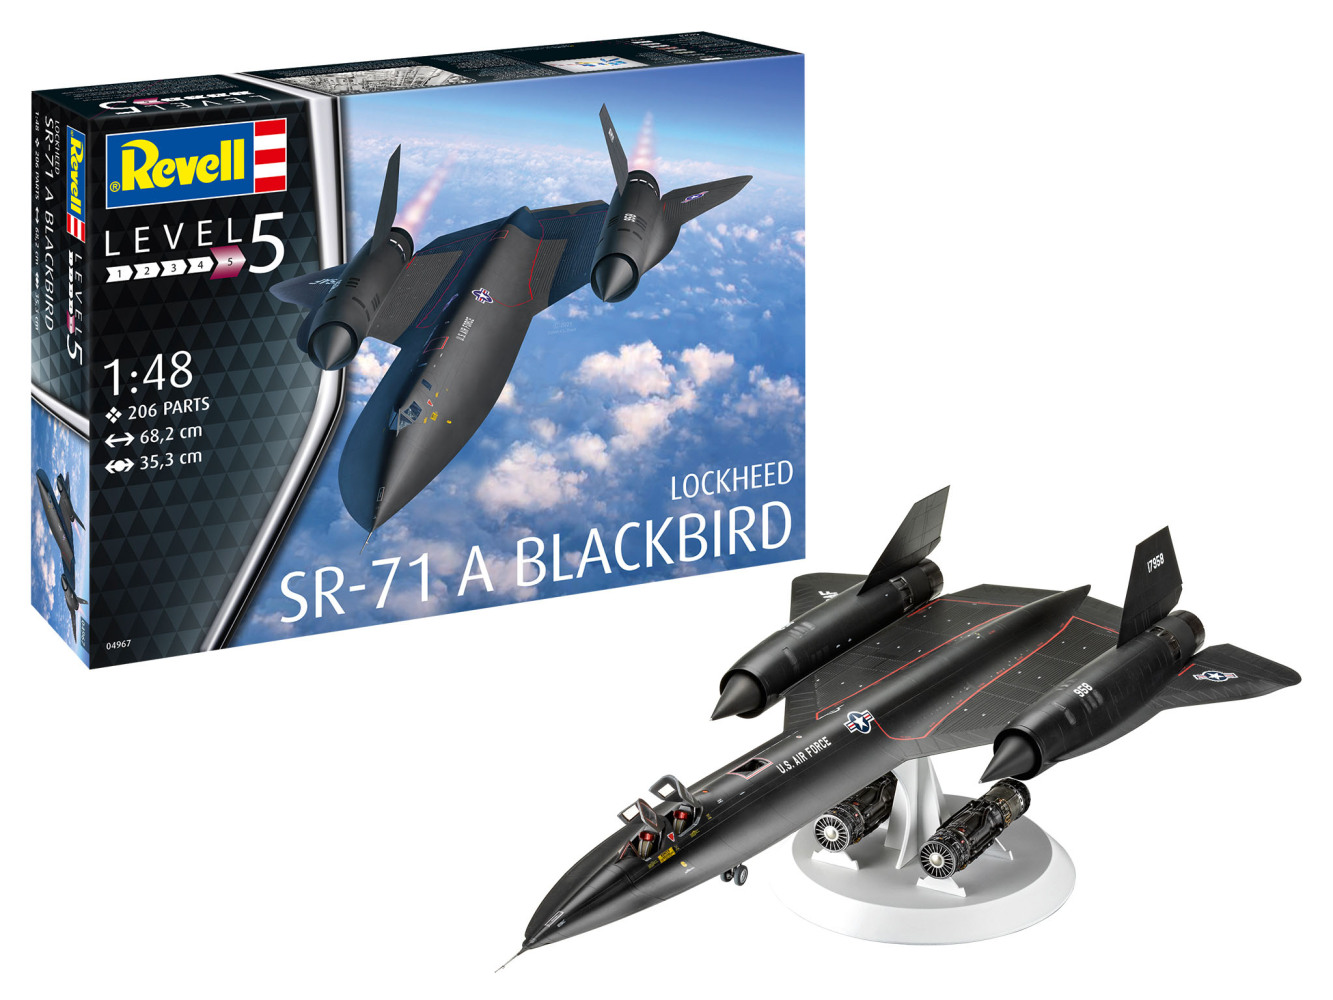 LOCKHEED SR-71 BLACKBIRD